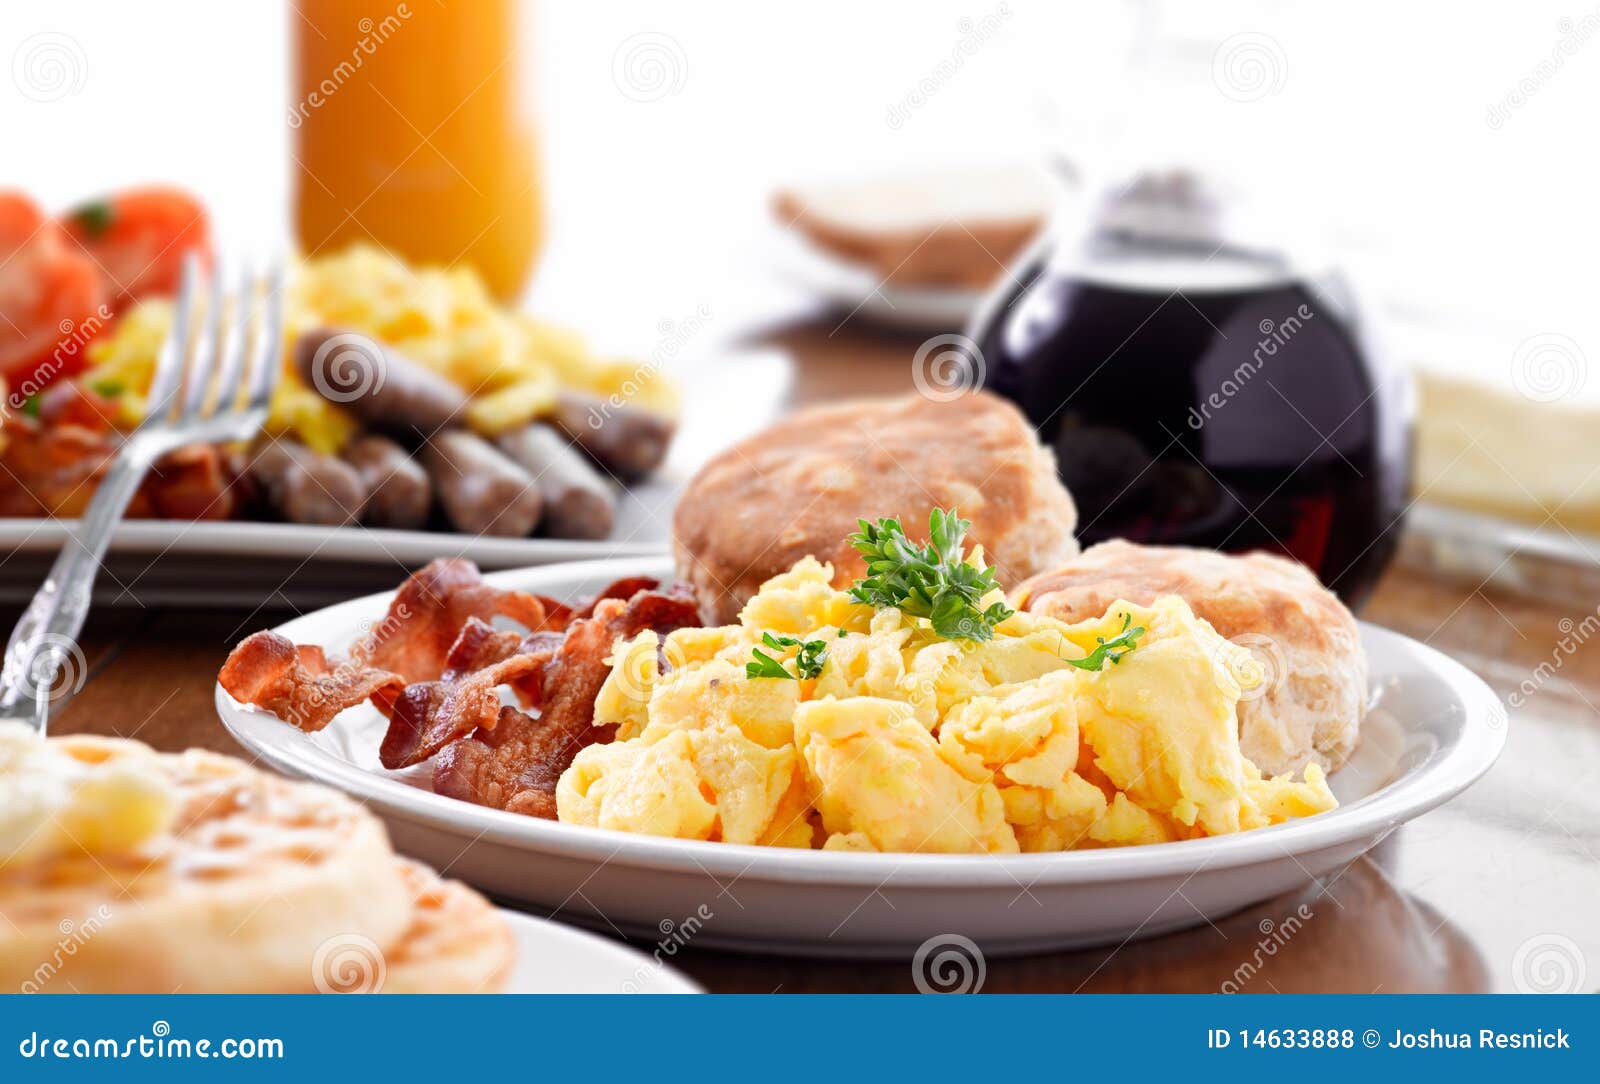 huge breakfast